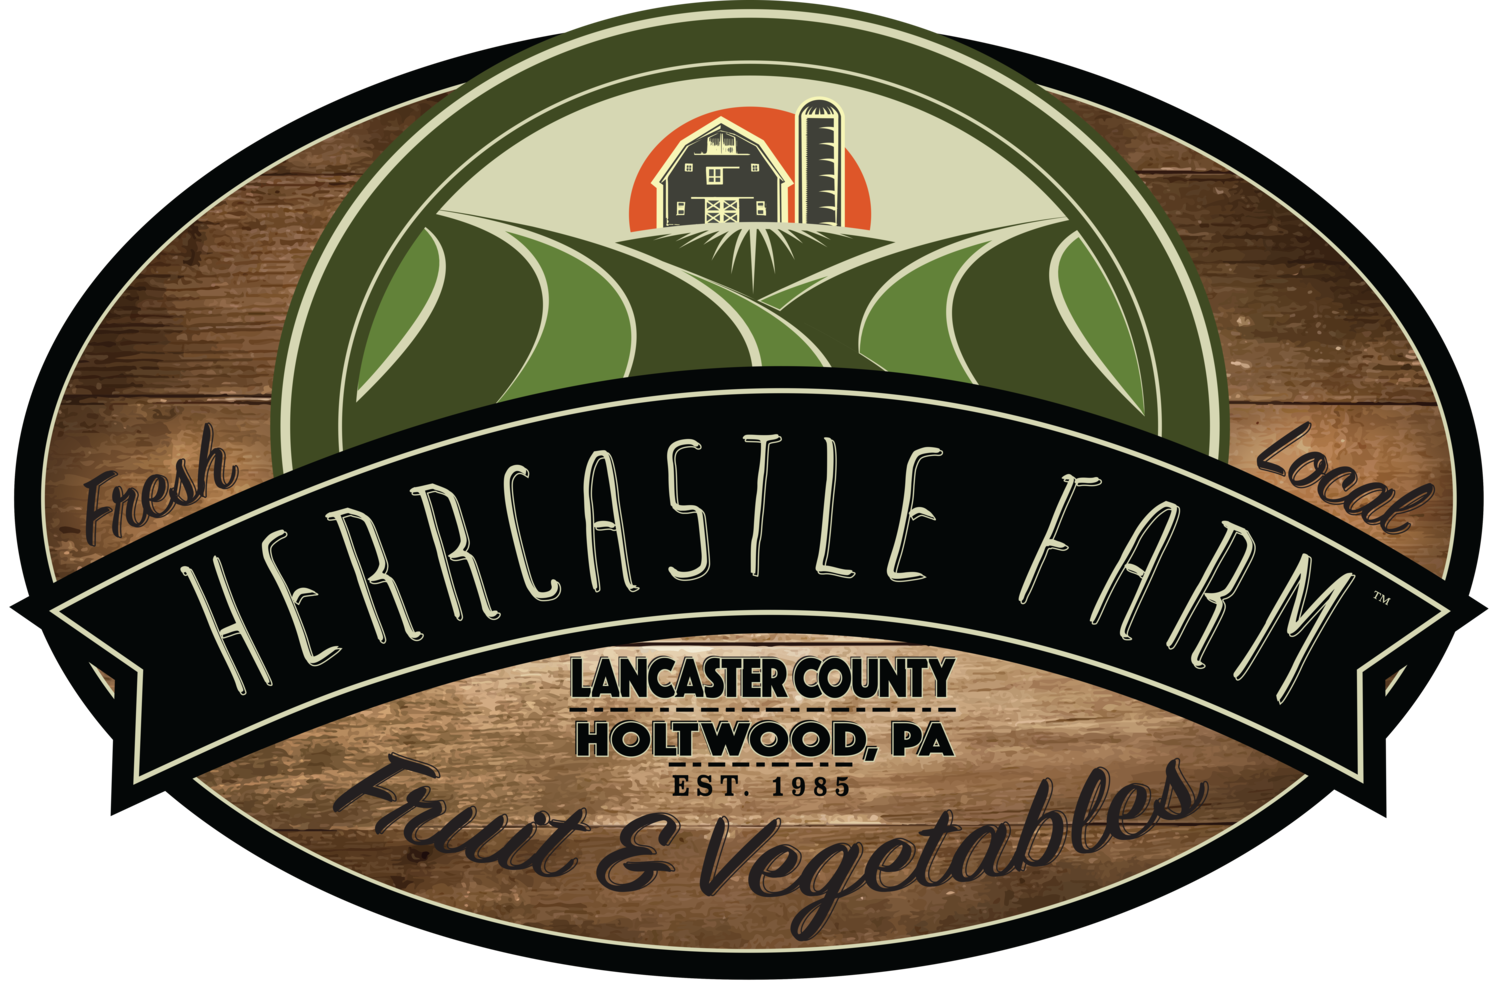 Herrcastle Farm